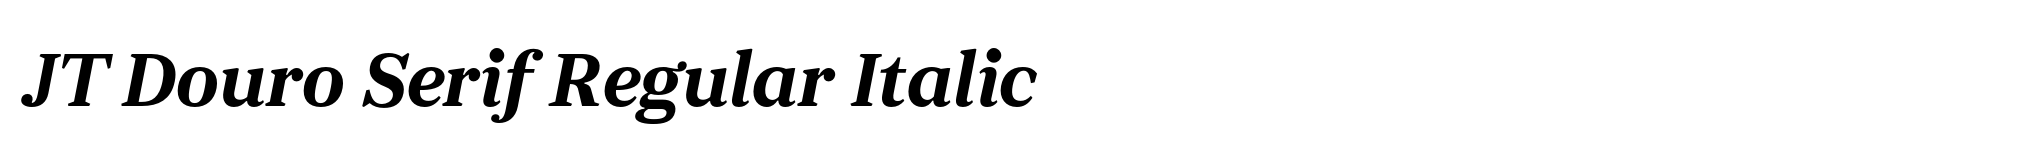 JT Douro Serif Regular Italic image